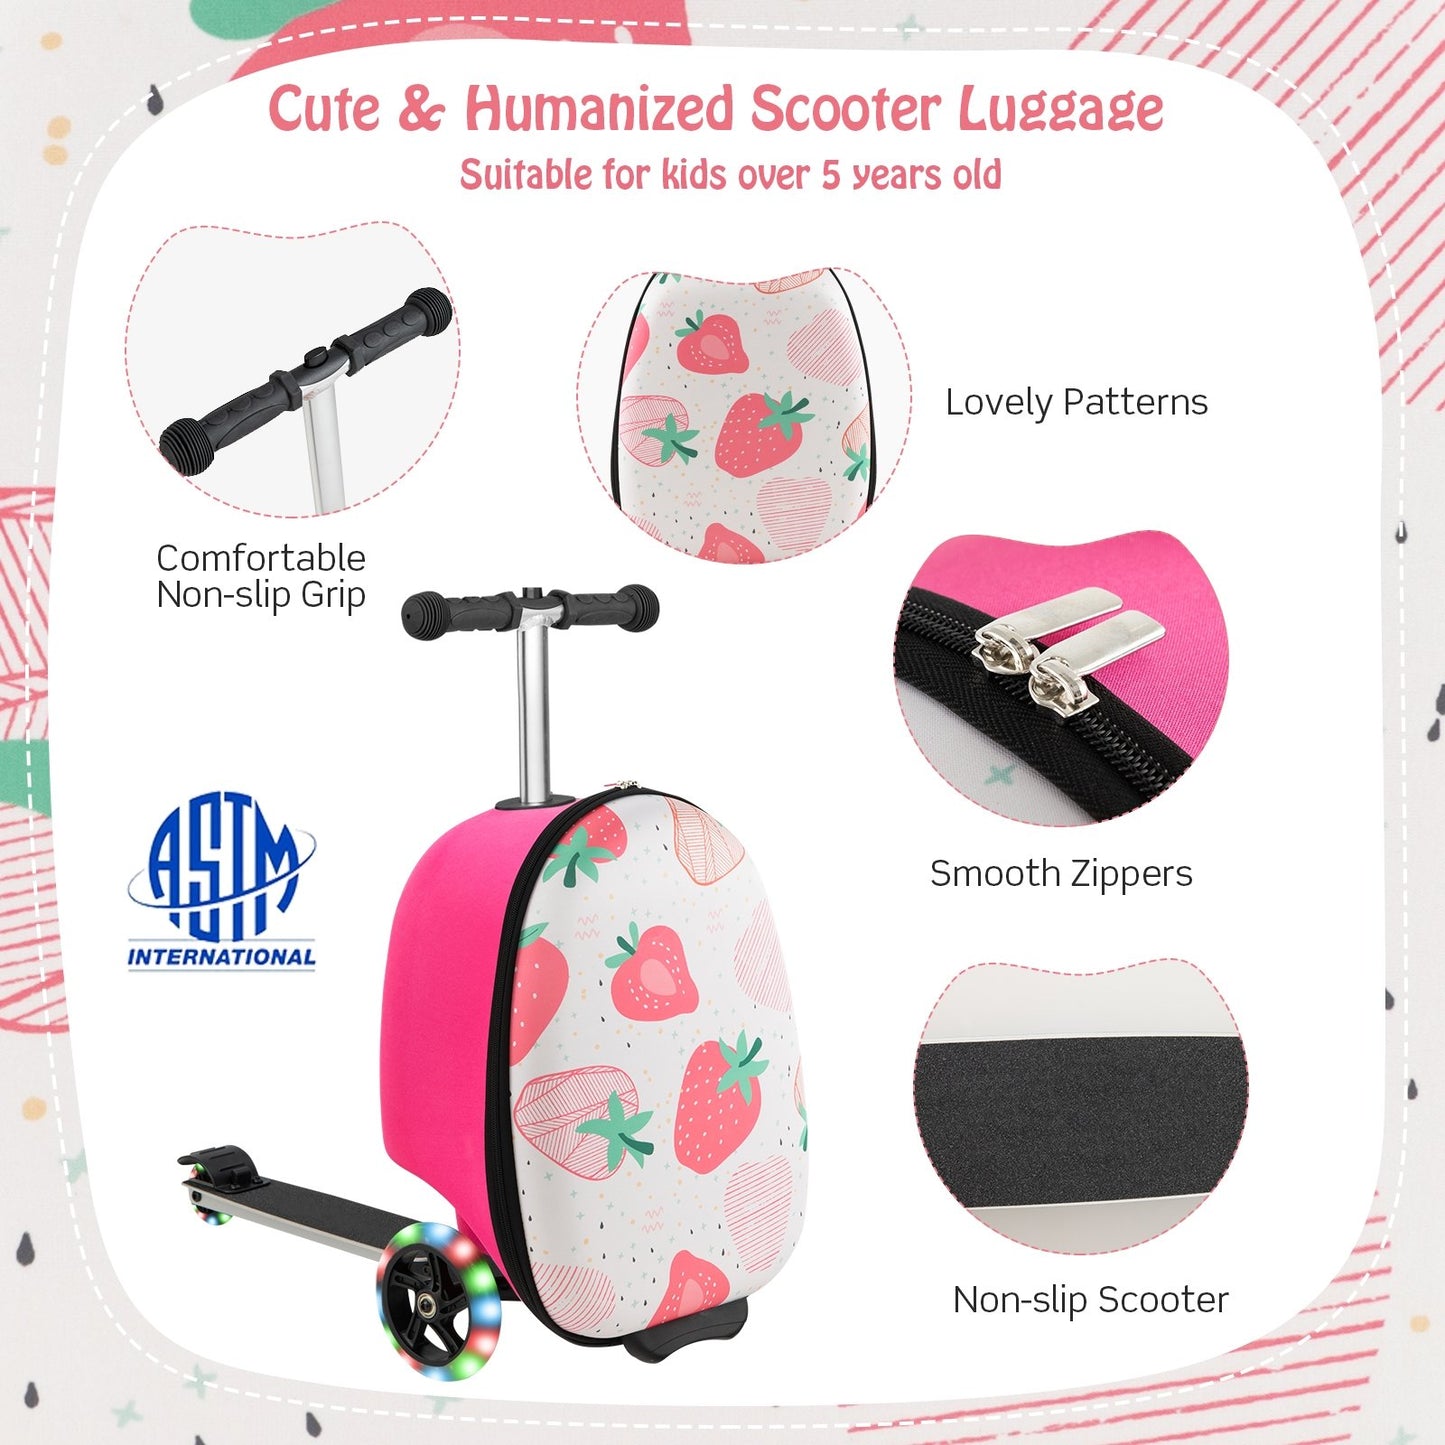 Hardshell Ride-on Suitcase Scooter with LED Flashing Wheels, Pink